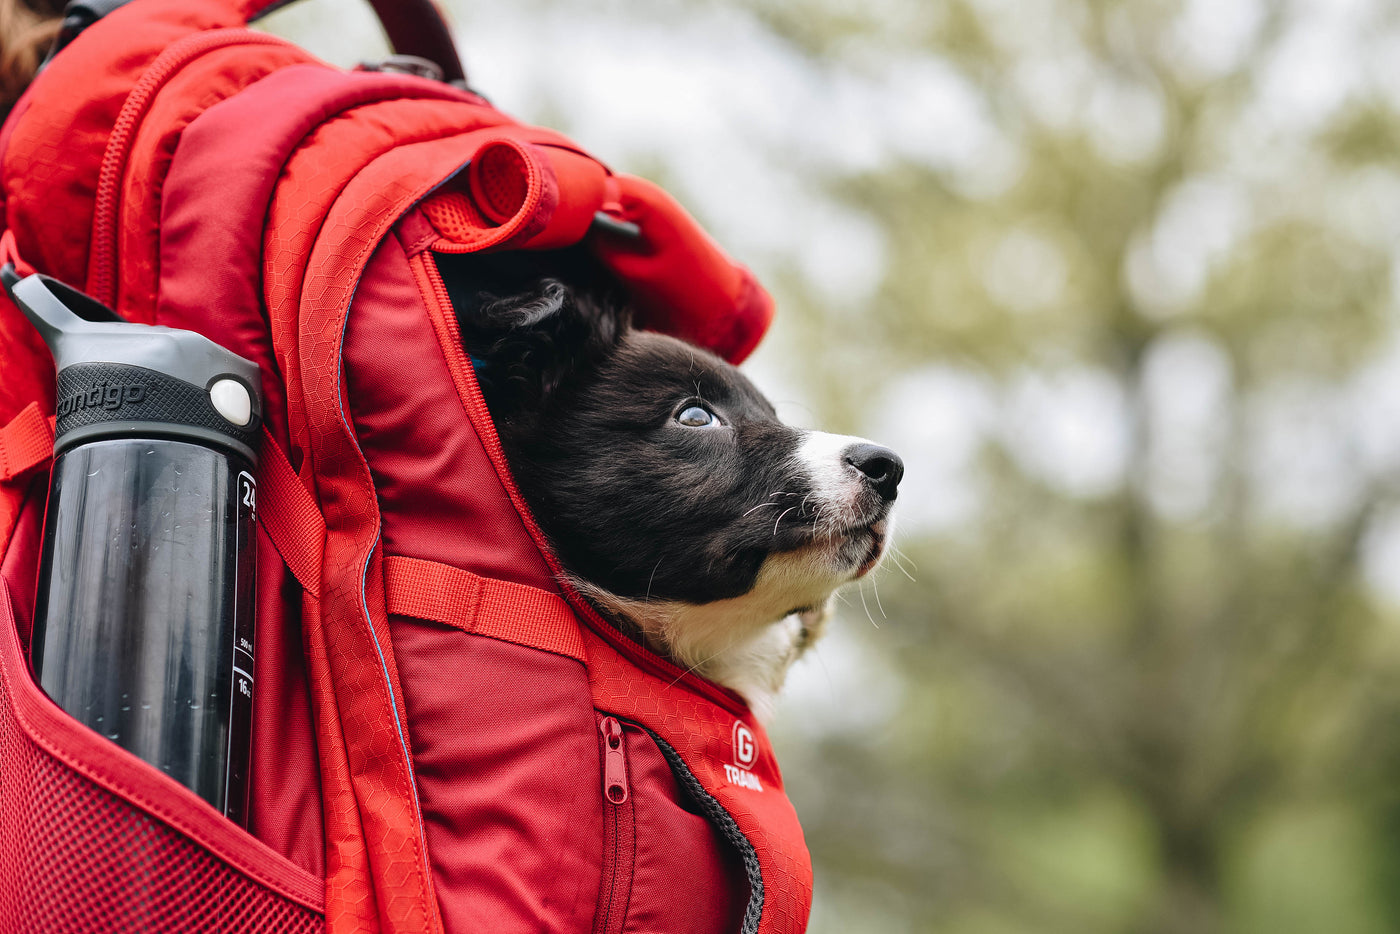 Kurgo G-Train Dog Carrier Backpack